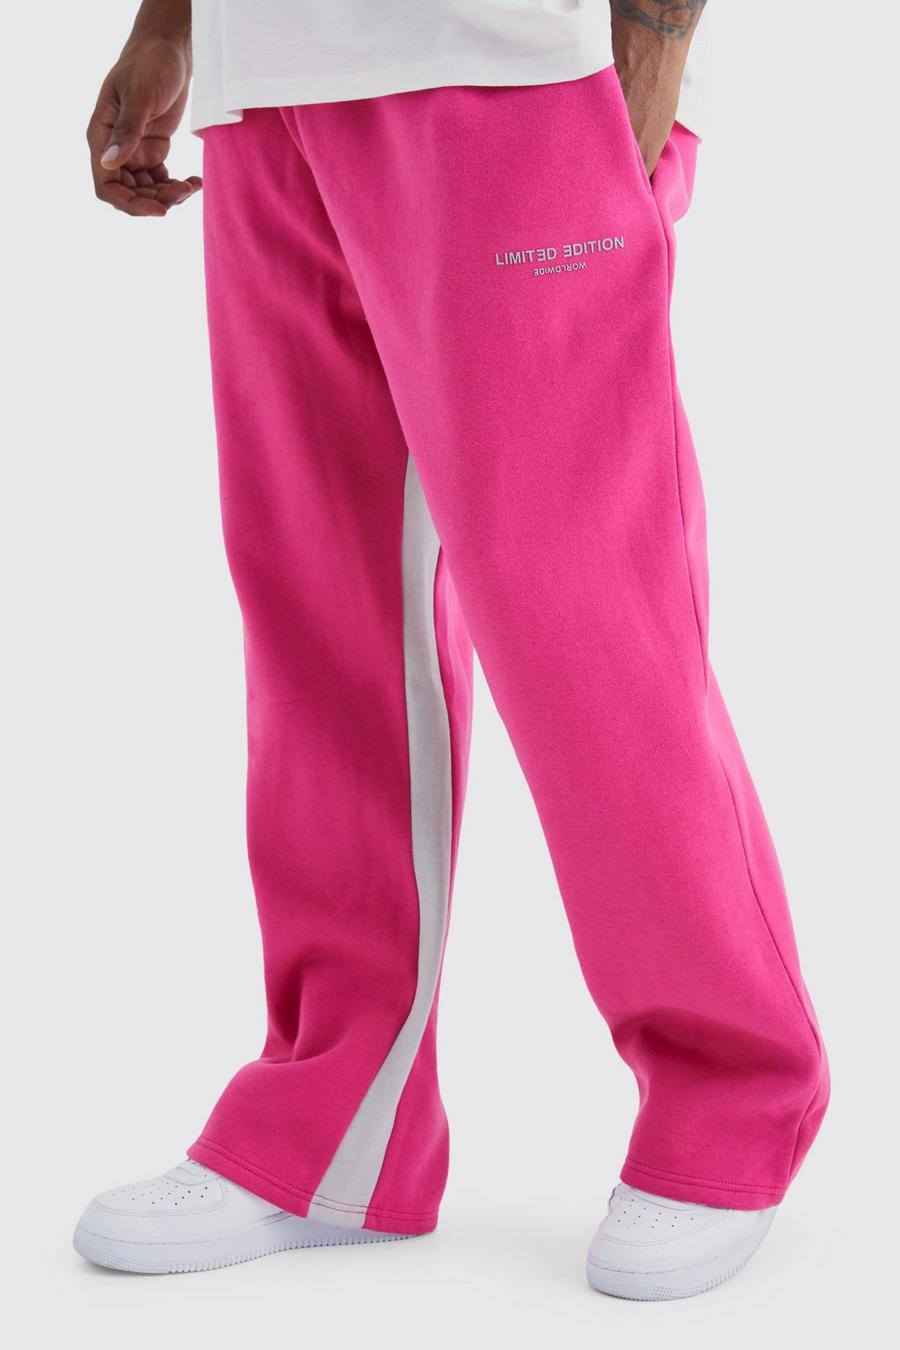 Plus Limited Jogginghose, Bright pink